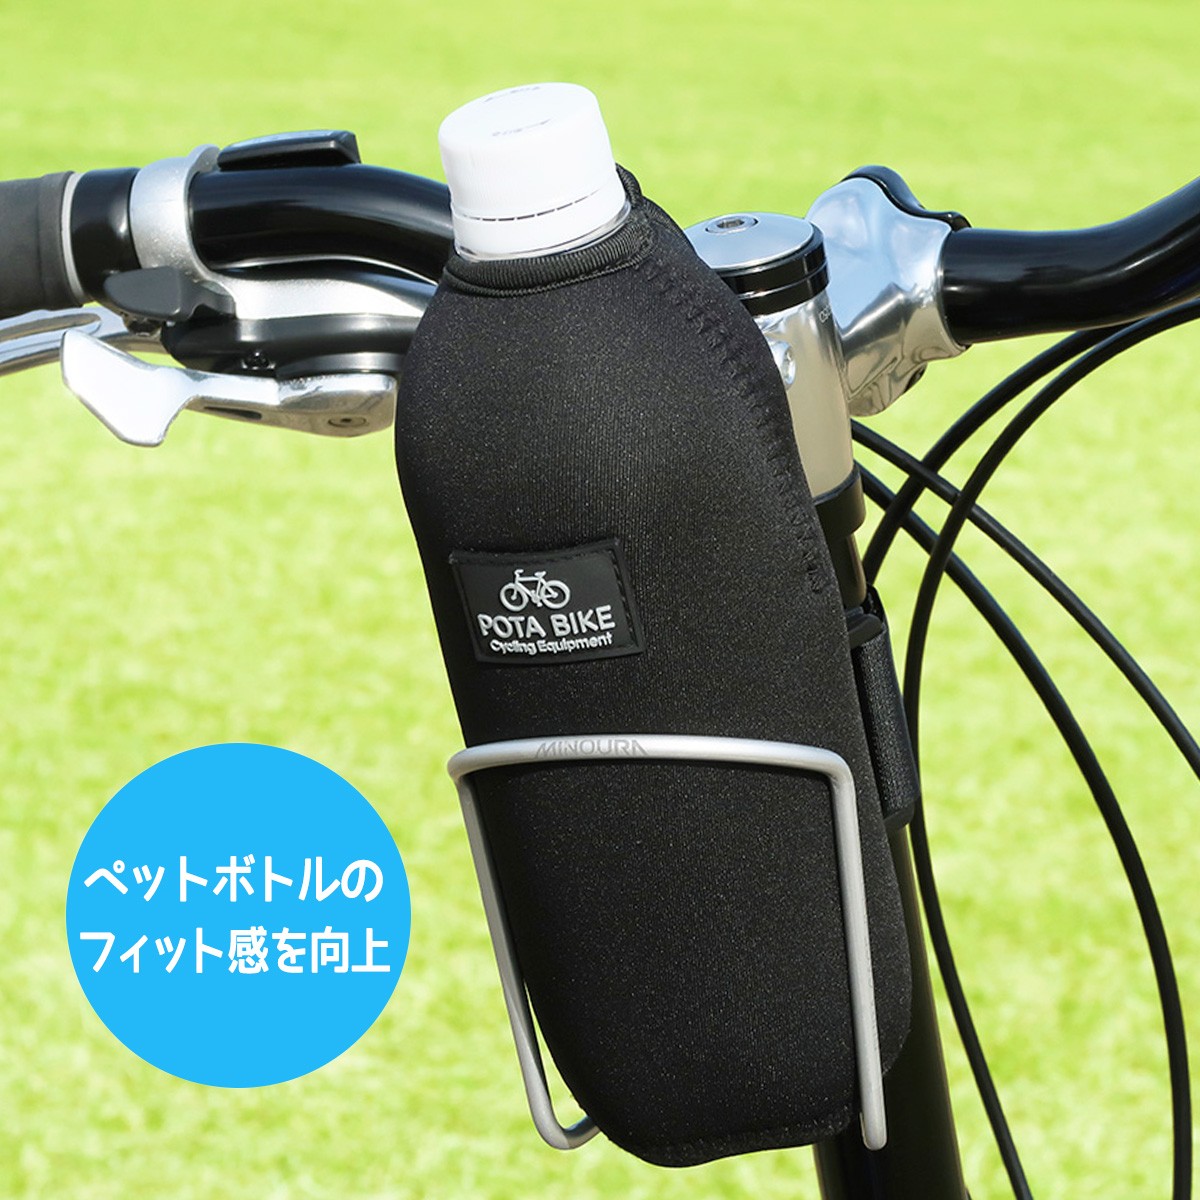 POTA BIKE(pota bike ) PET bottle cover 500ml bottle exclusive use TNI... cap 3 piece attaching 